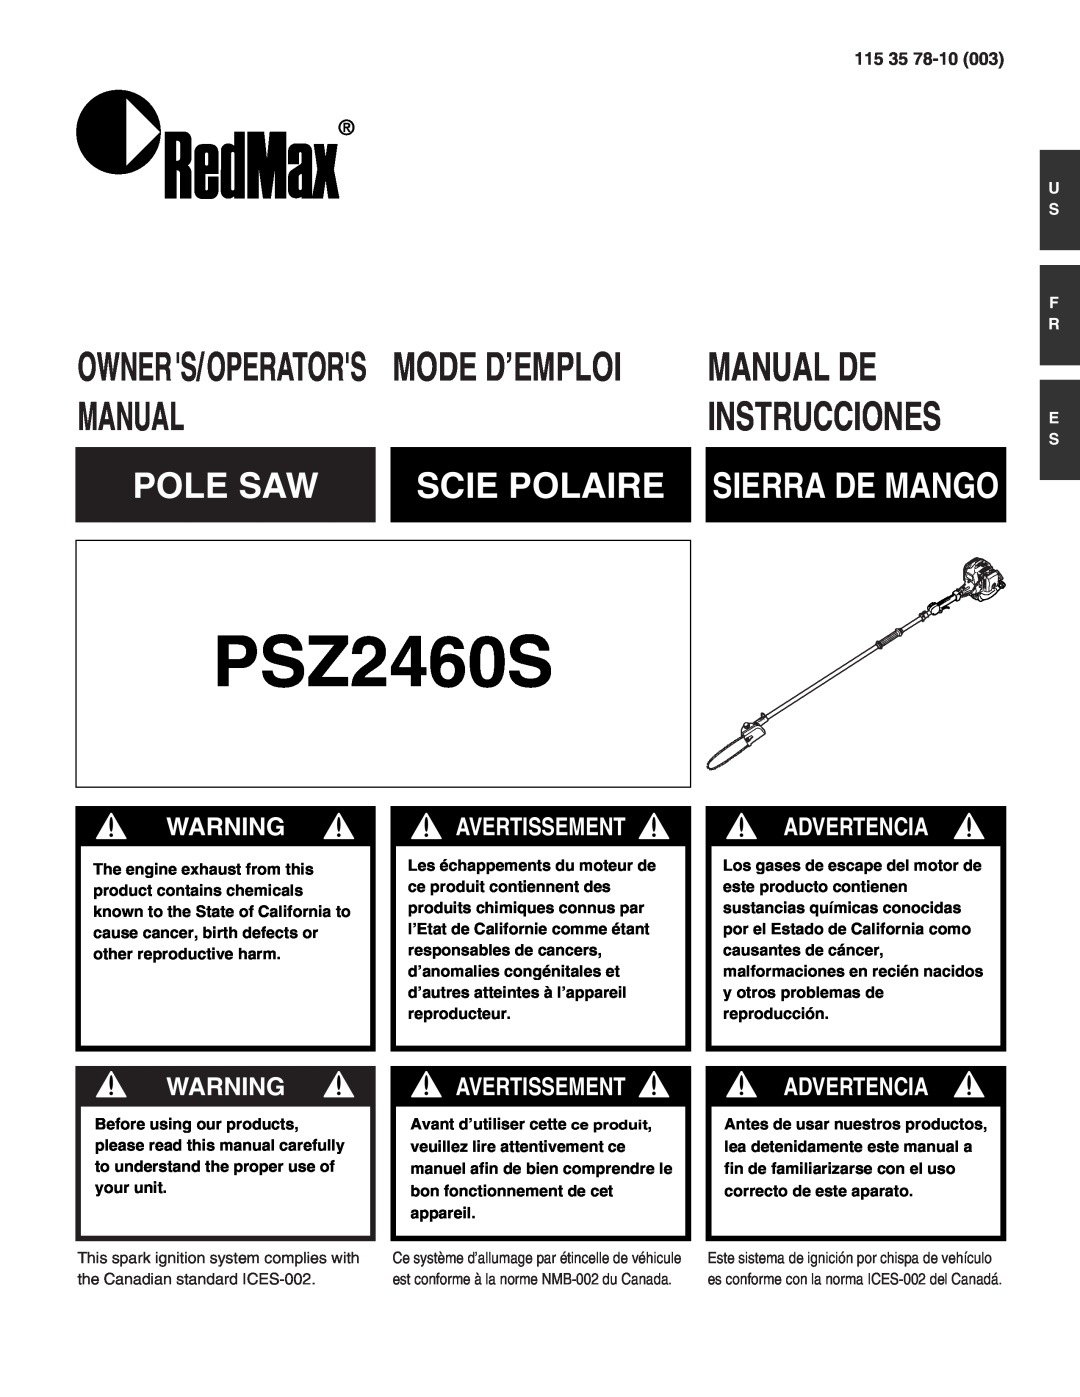 RedMax PSZ2460S manual Mode D’Emploi, Pole Saw, Scie Polaire, 115 35, U S F R E S, Manual De, Instrucciones, Advertencia 